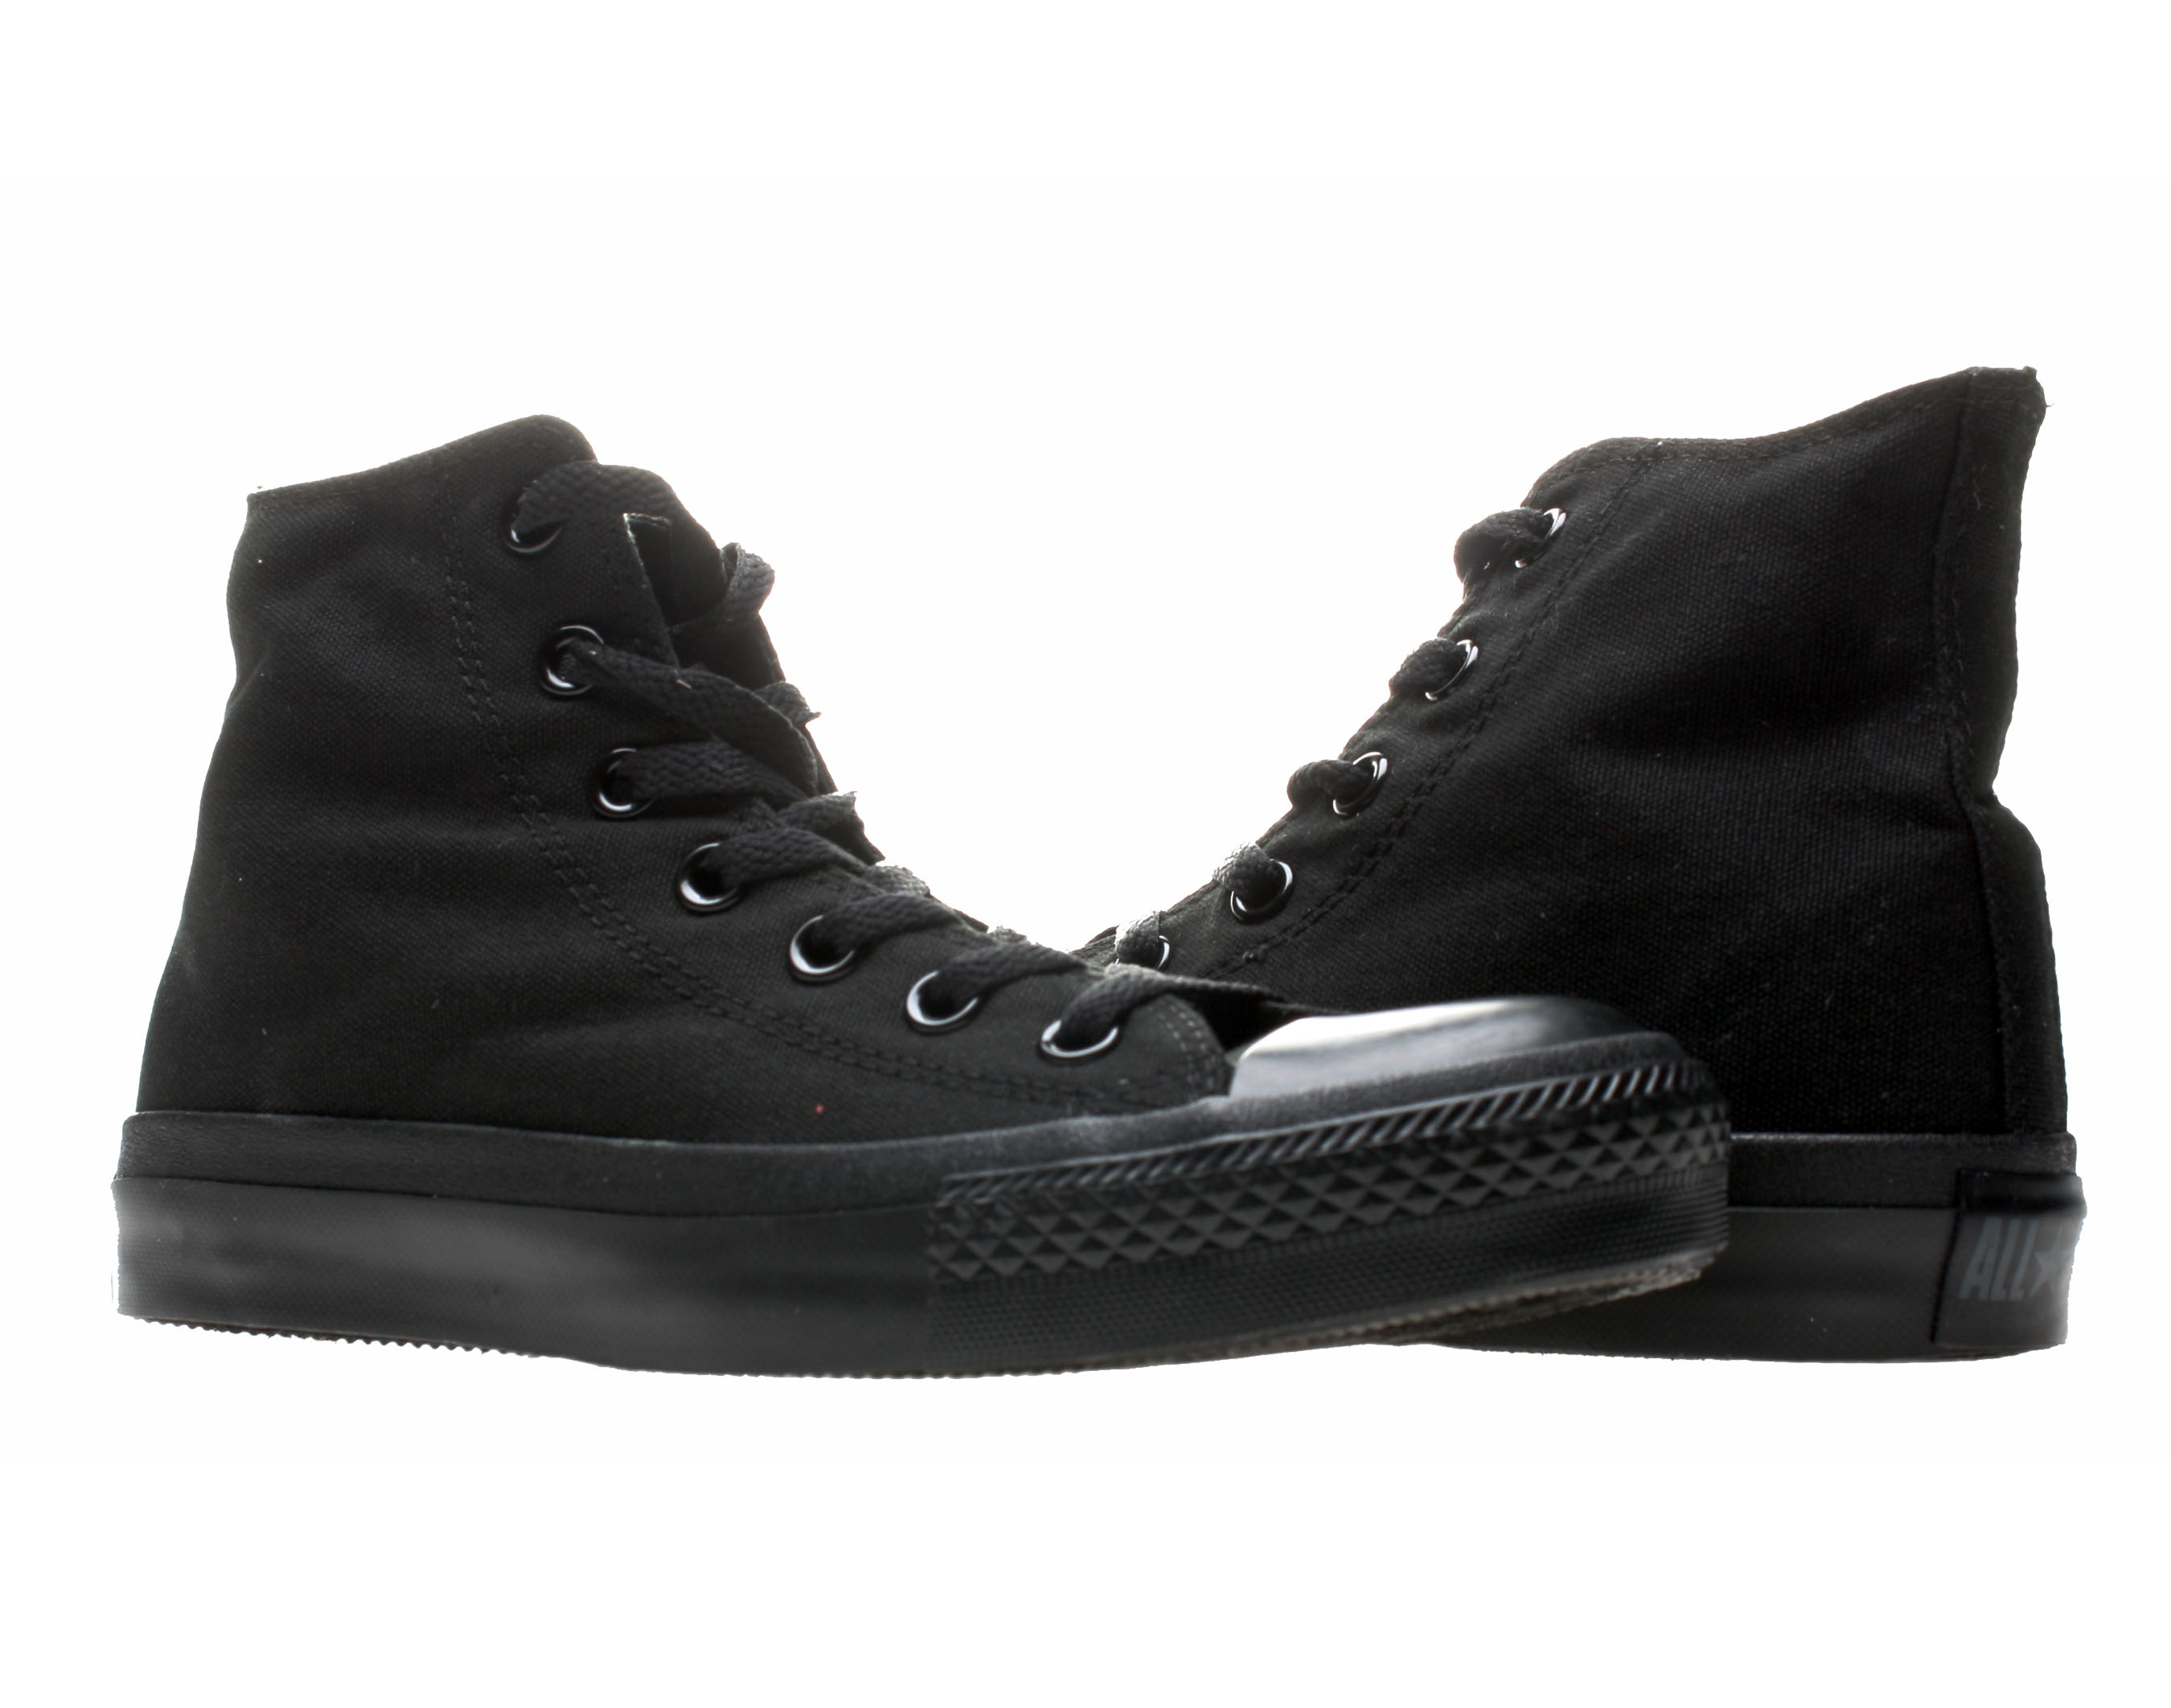 CONVERSE All Star Black Mono Low Top Chuck Taylor Men Women Shoes Sneaker - image 1 of 6